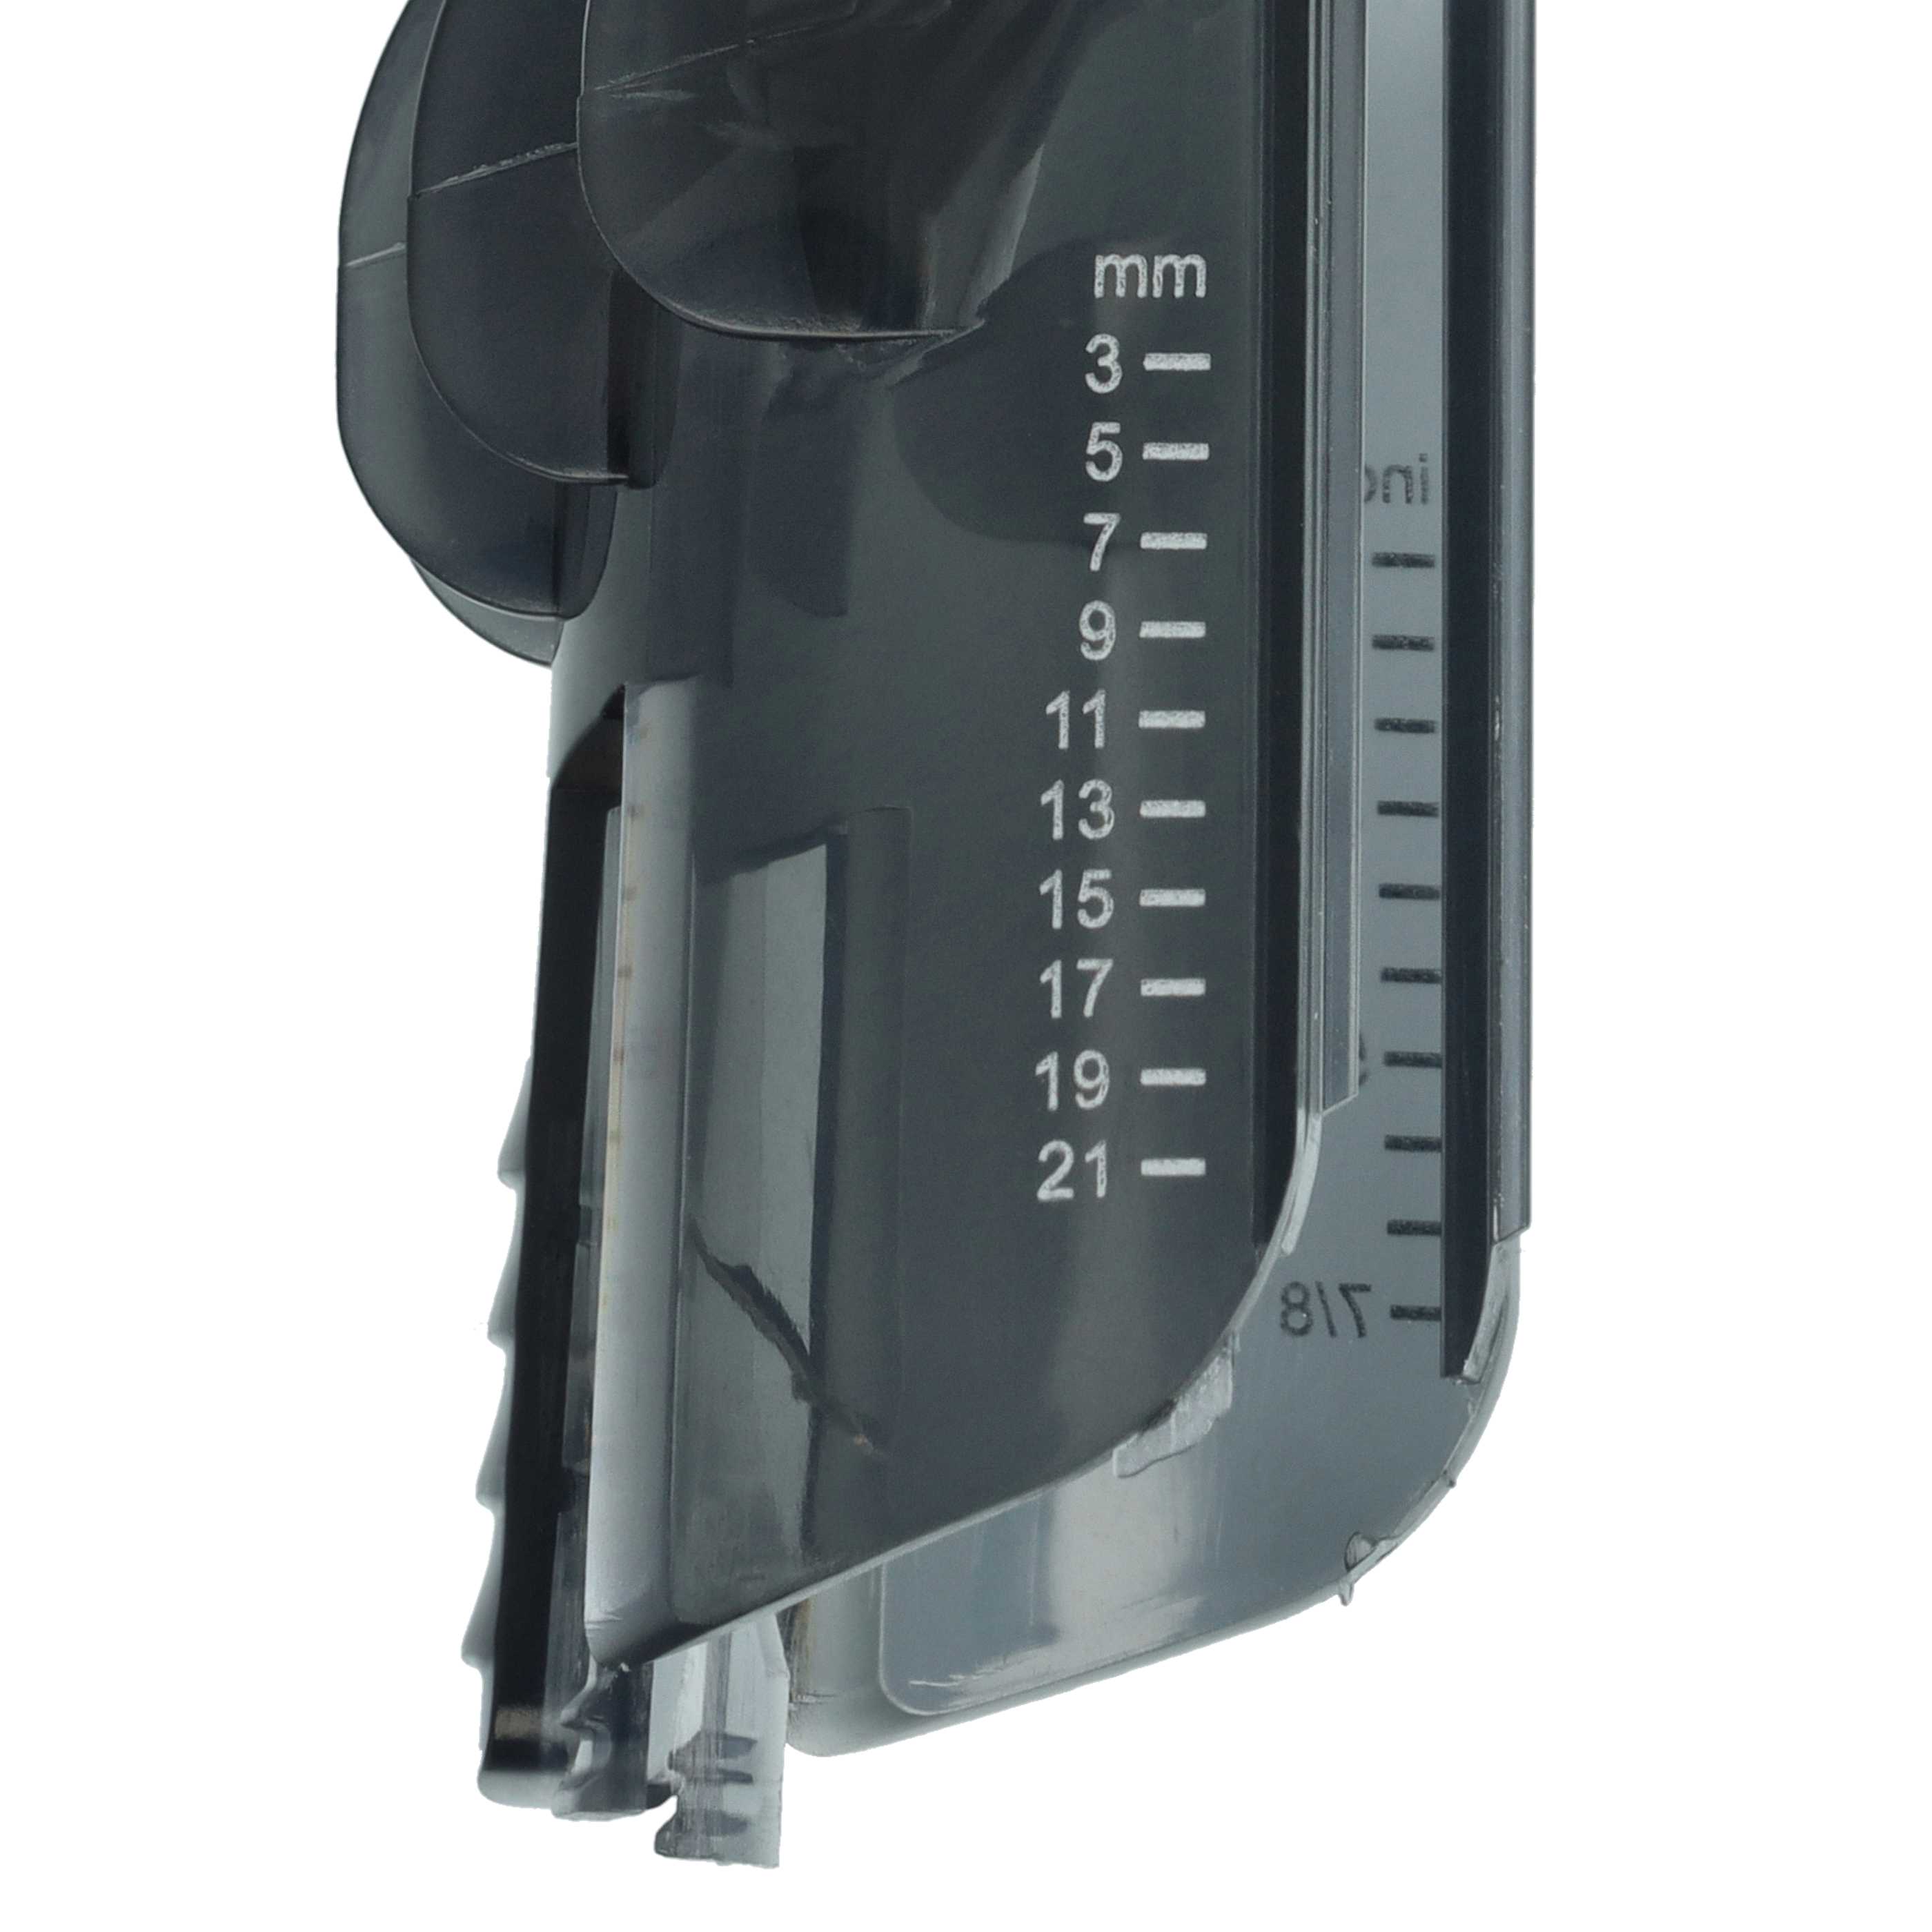 Peine 3 - 21 mm (1/8" - 7/8") reemplaza Philips CRP389 para máquina cortapelo Philips